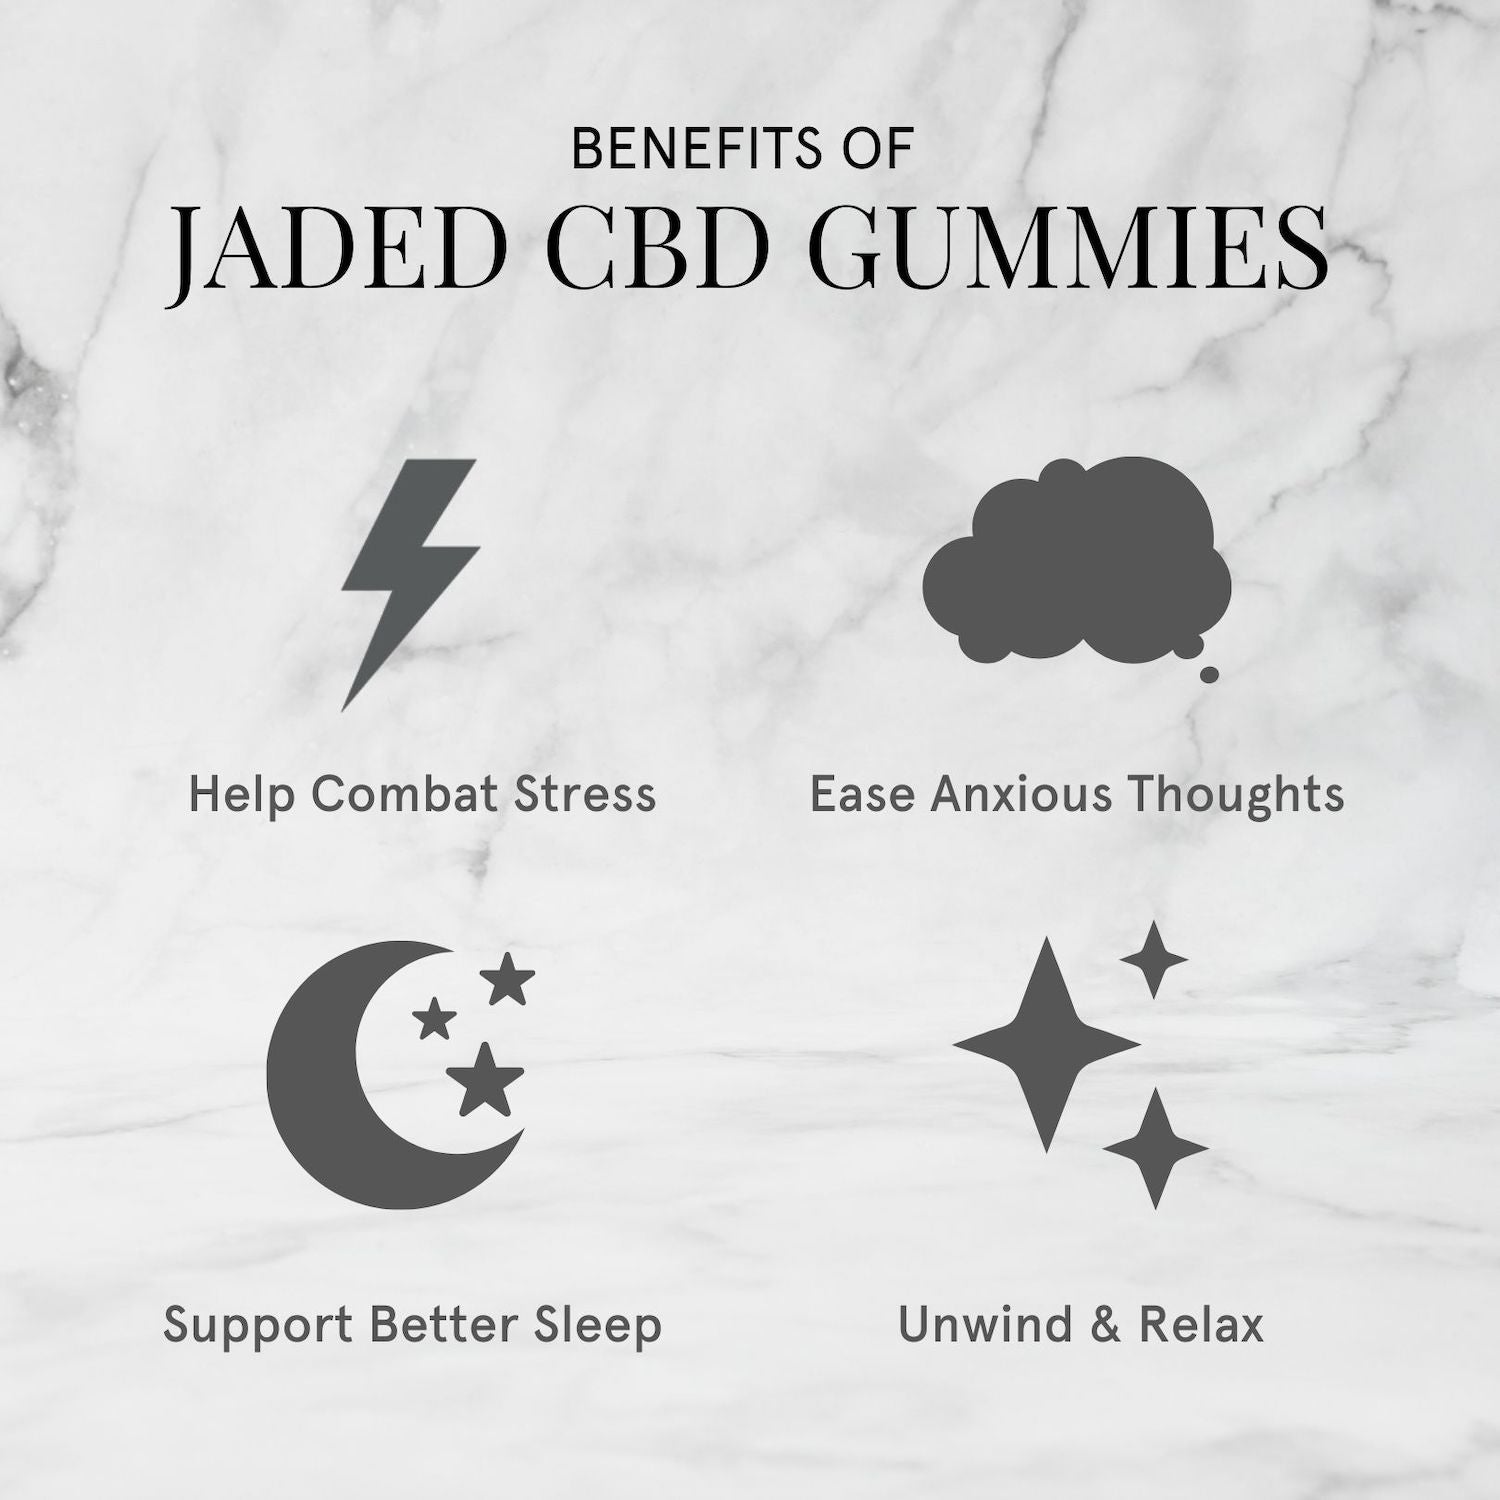 Benefits of JADED CBD Gummies